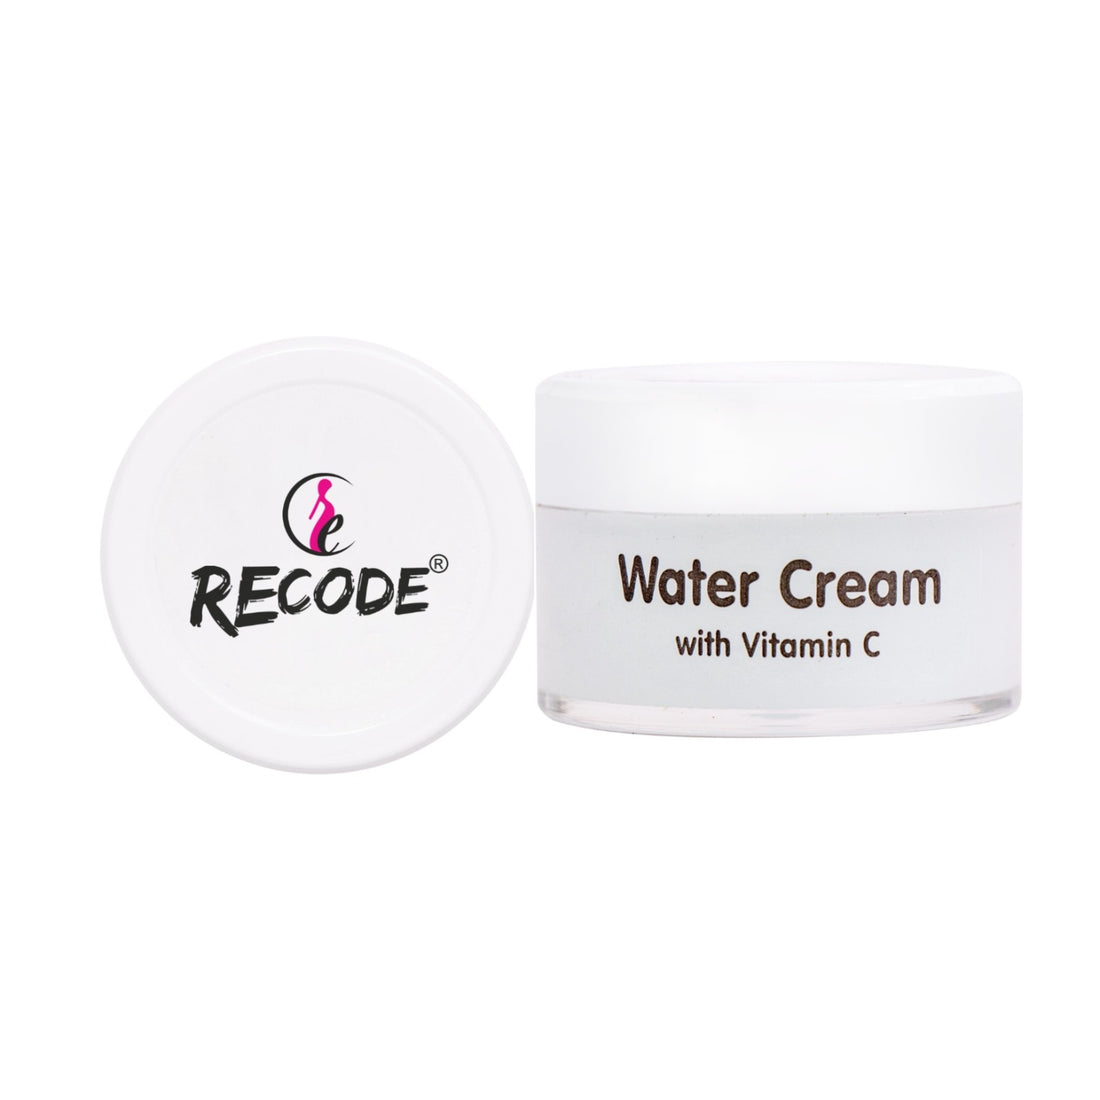 Recode water cream 15 gms